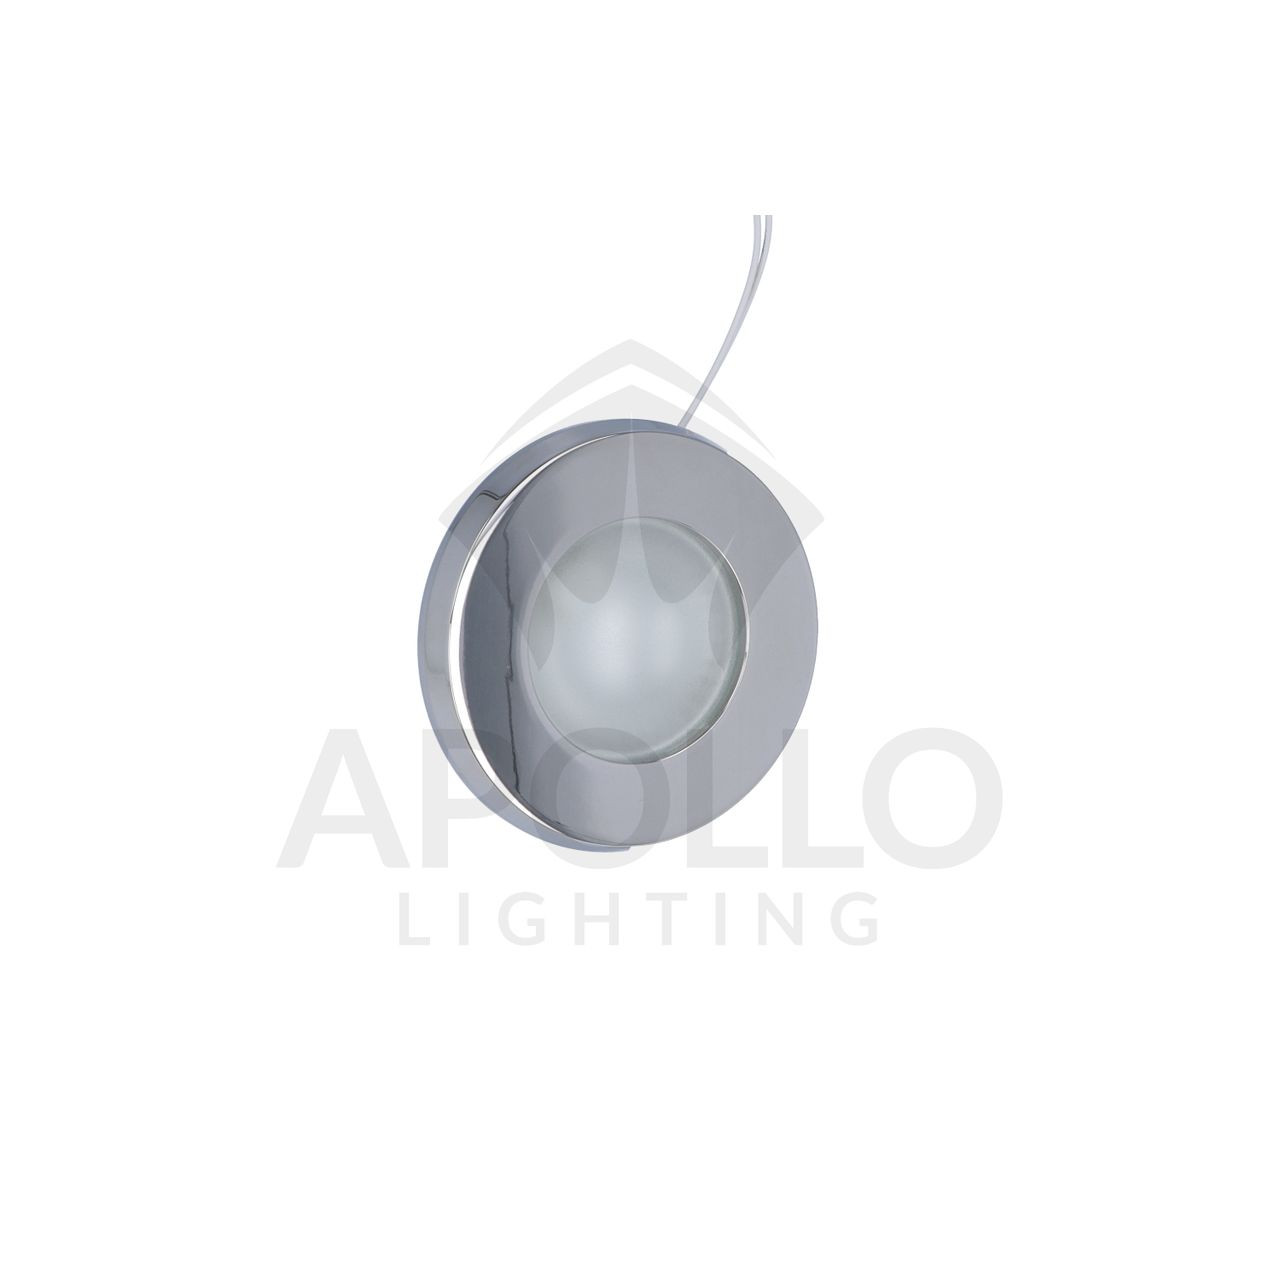 DRSA - Corsica Downlight - G4 Socket - Apollo Lighting